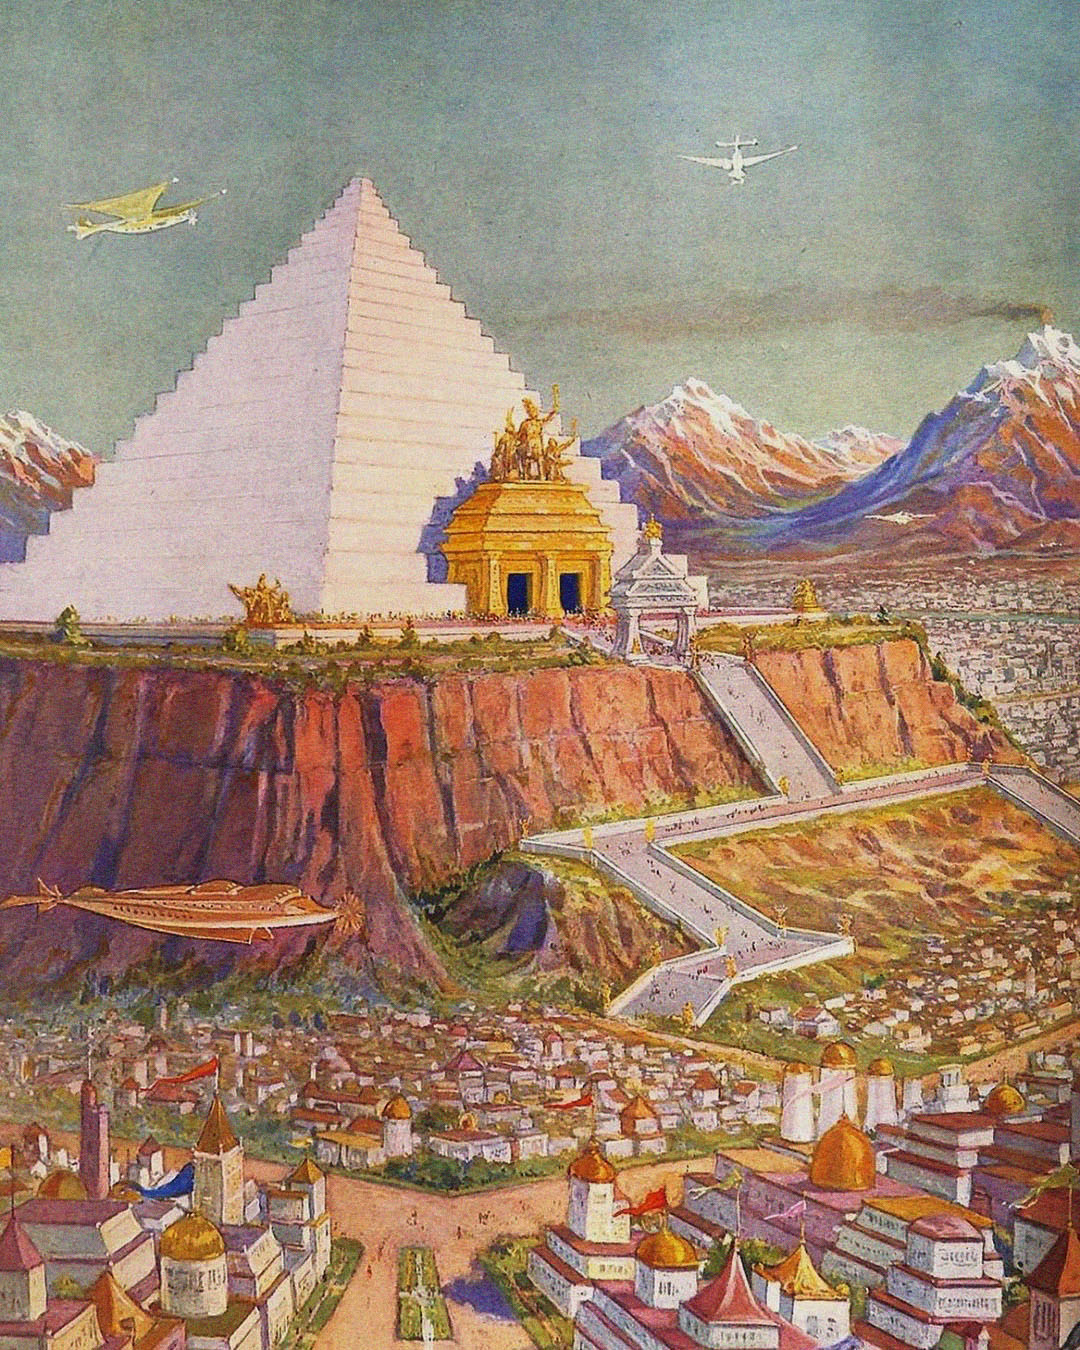 Vision of Atlantis